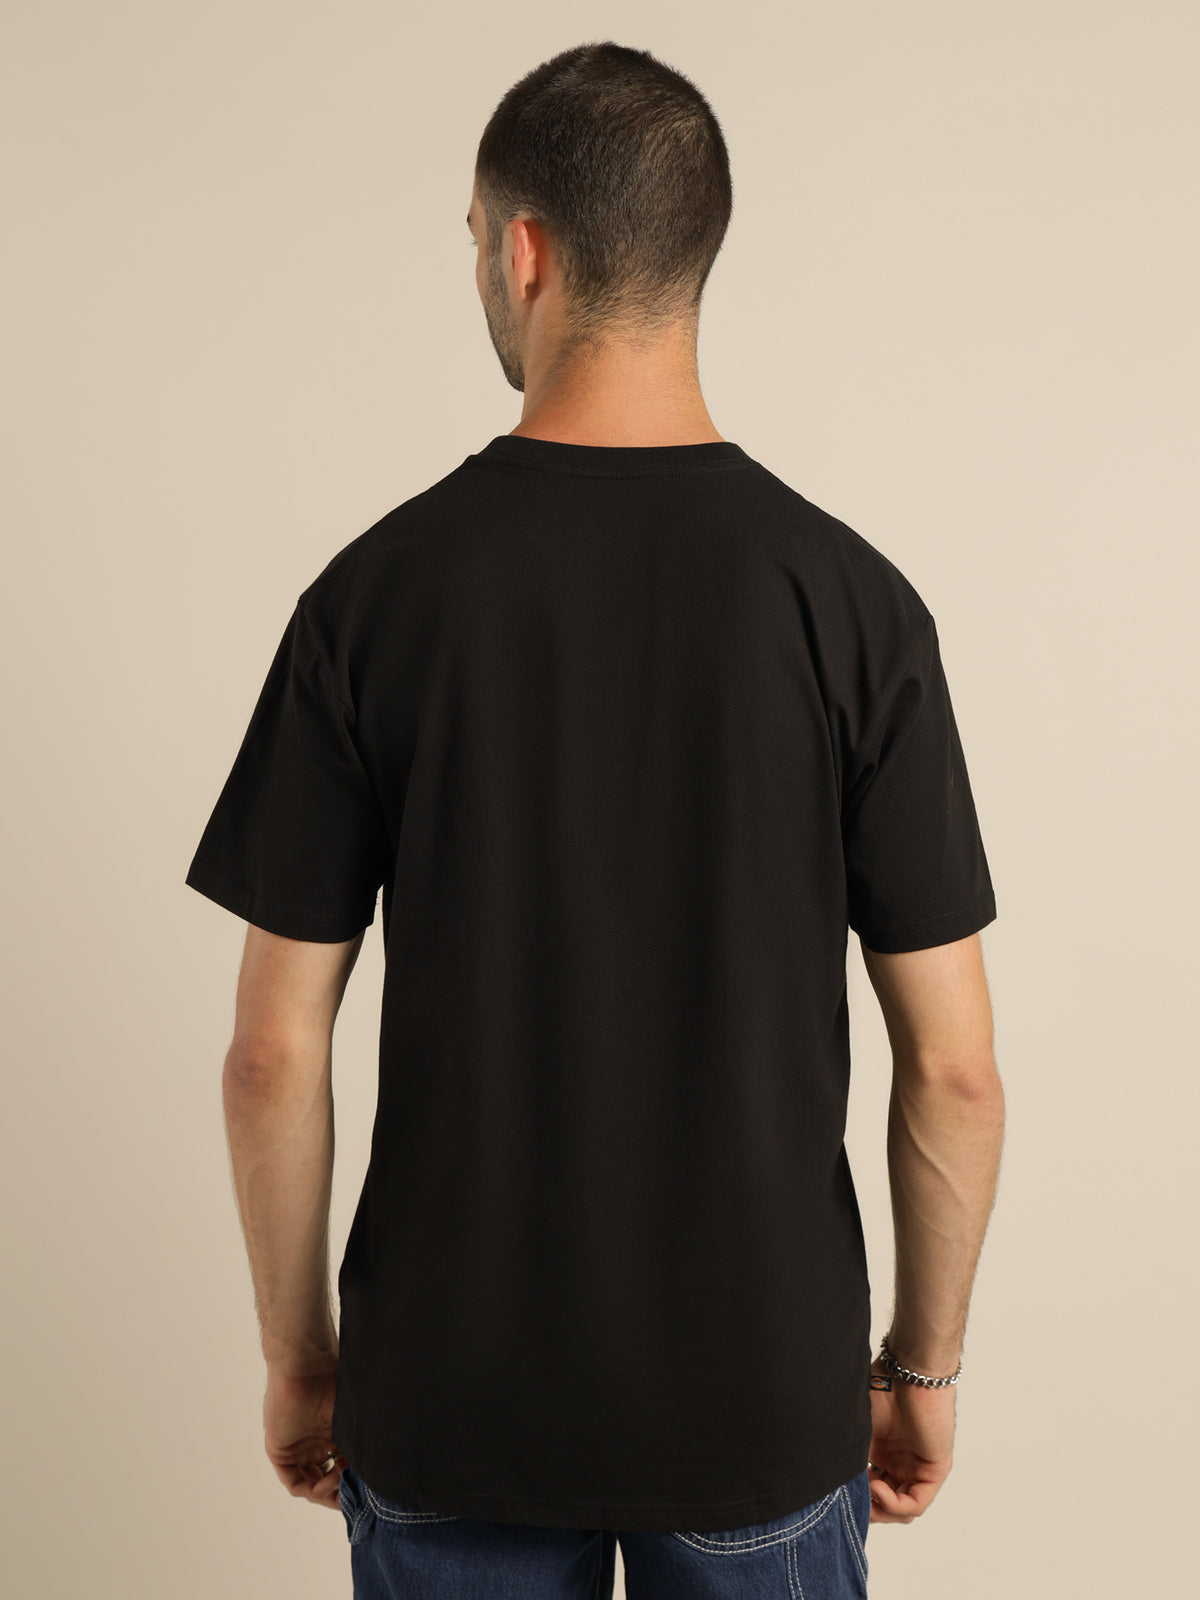 Gail T-Shirt in Black